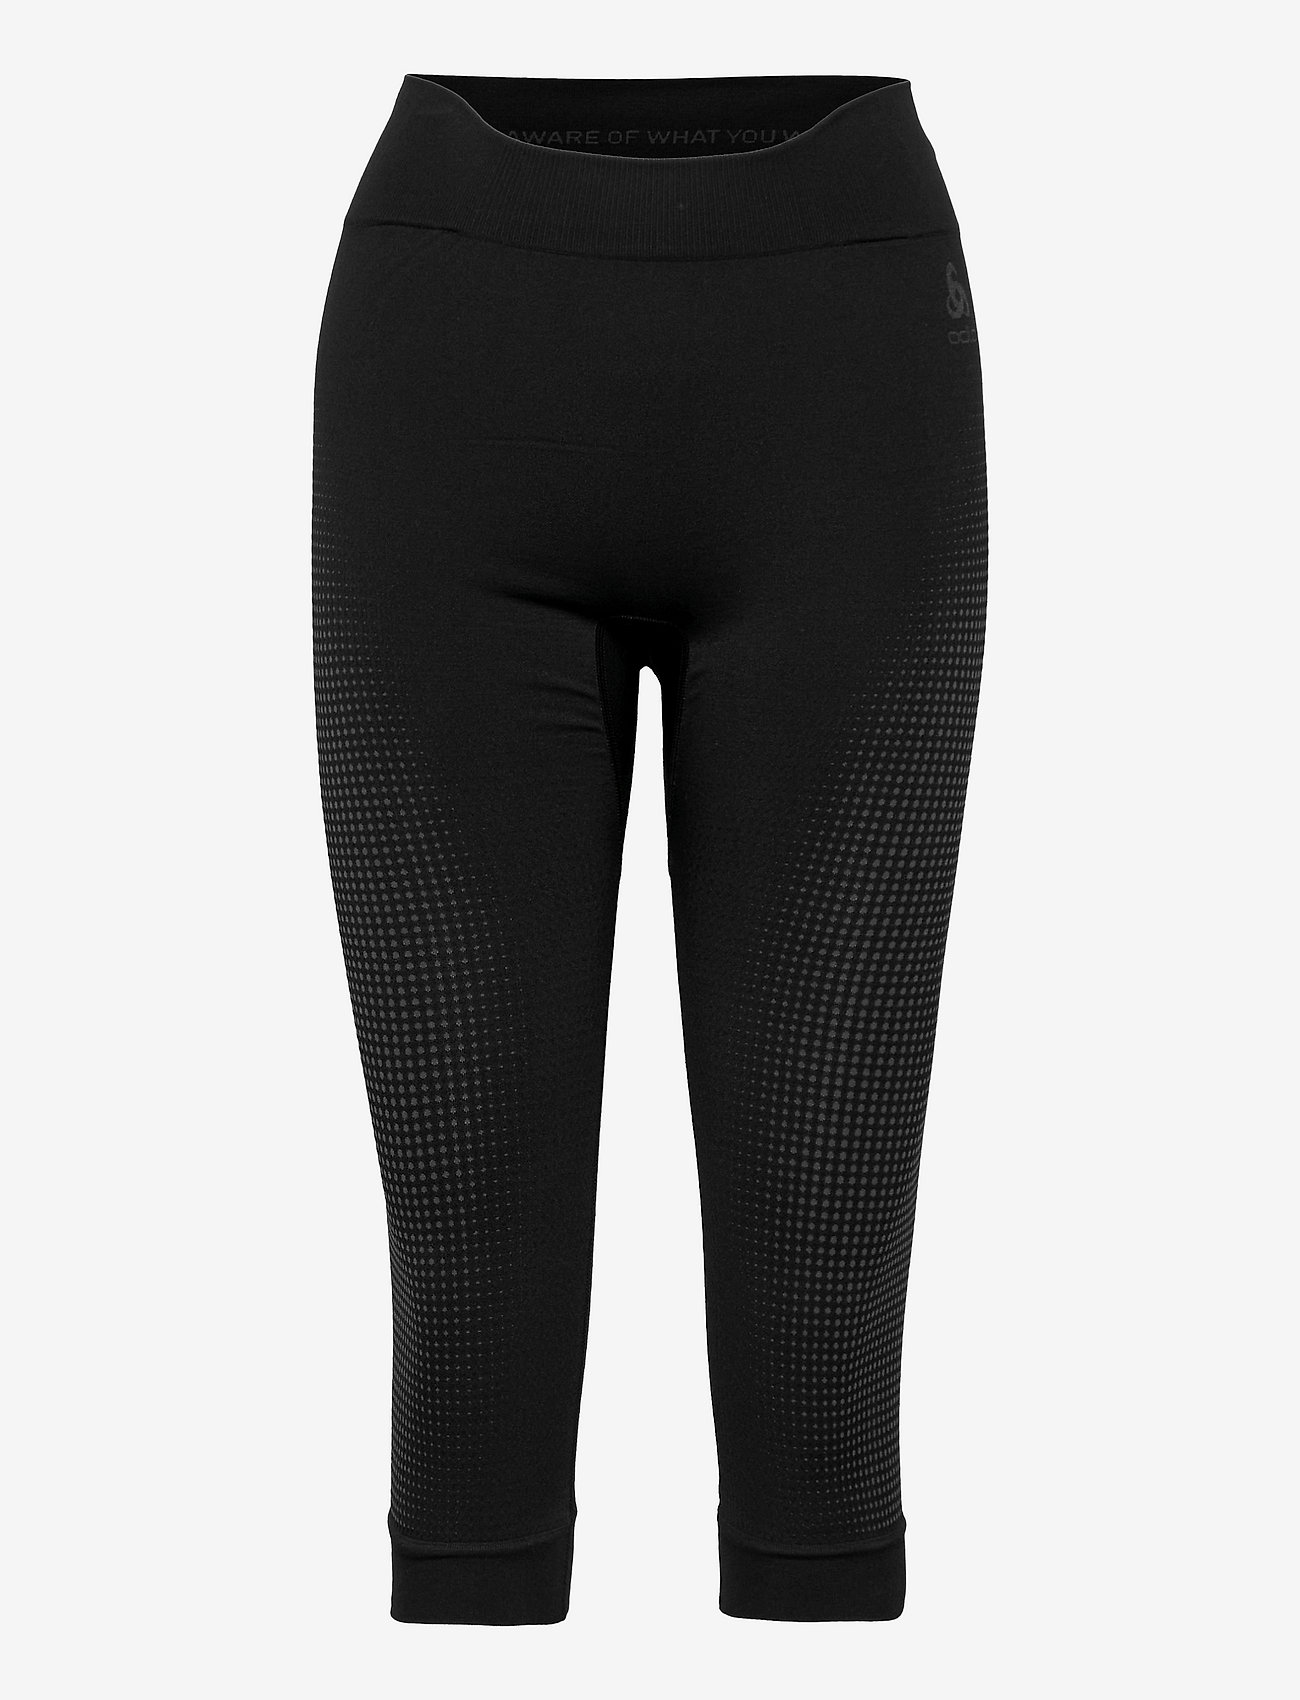 Odlo - Aluminium Pants 3/4 Performance Warm ECO - kerrastohousut - black - new odlo graphite grey - 0